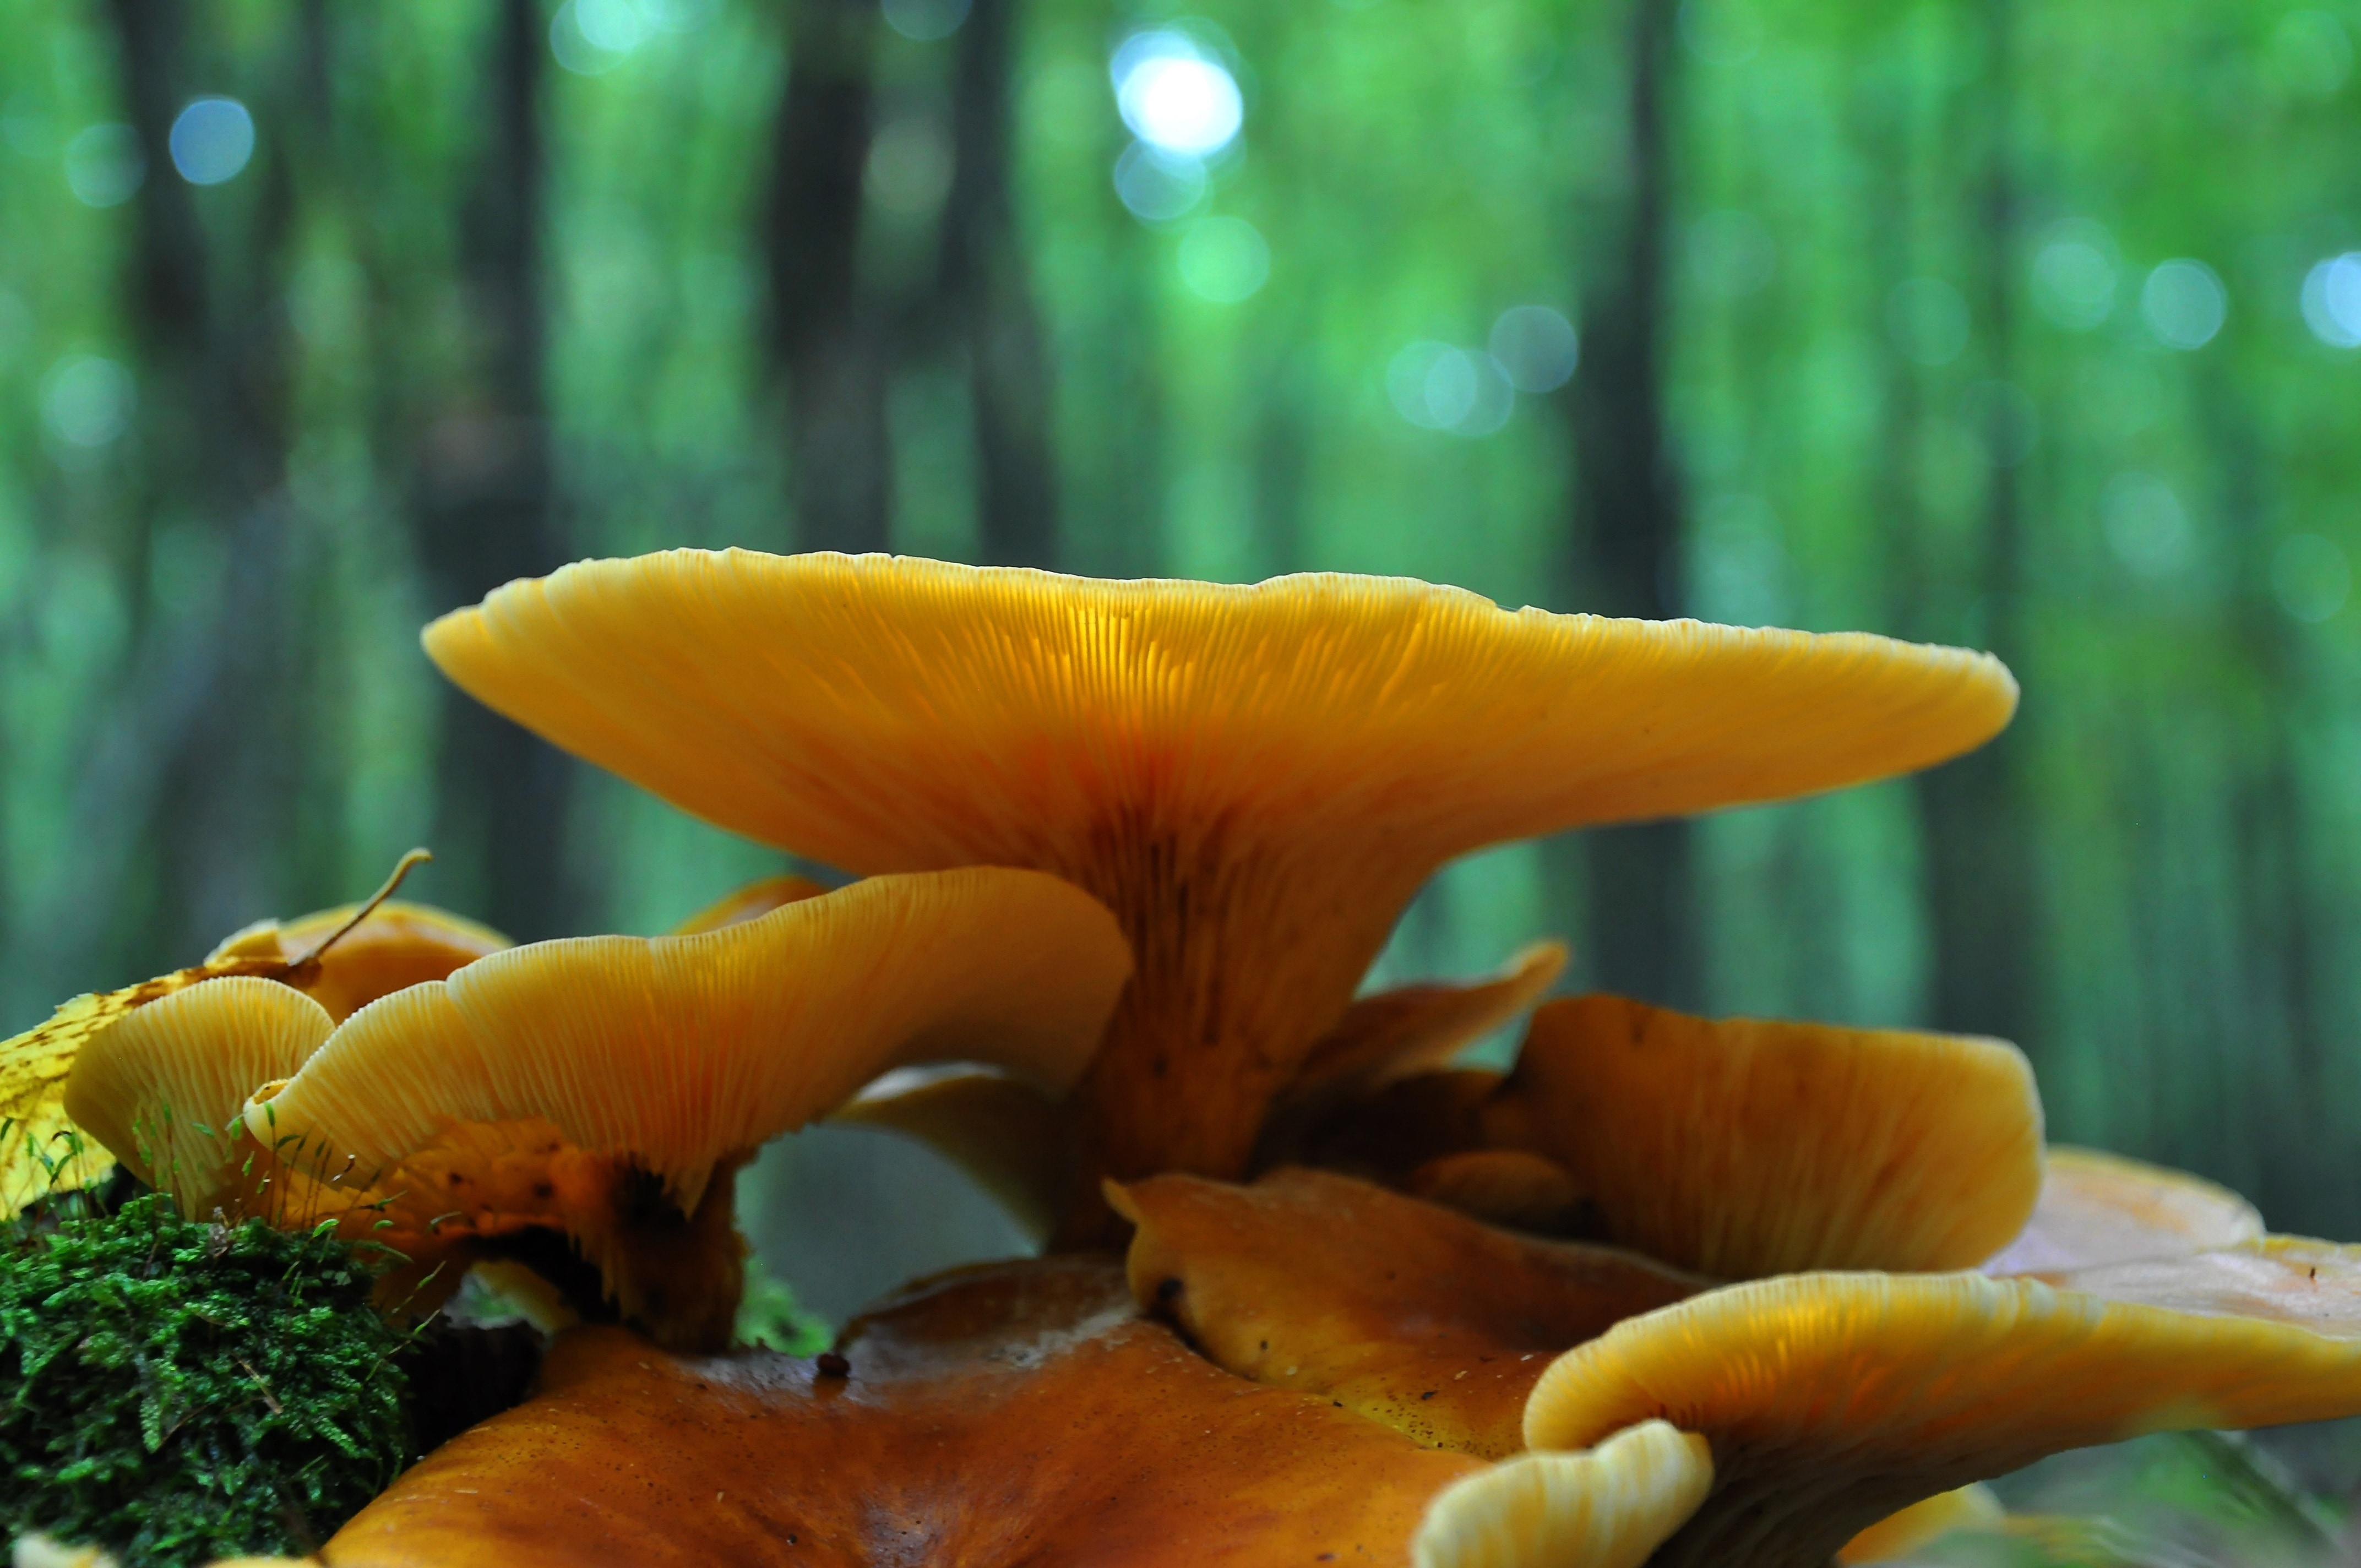 Forest, Mushroom, Autumn, freshness, close-up